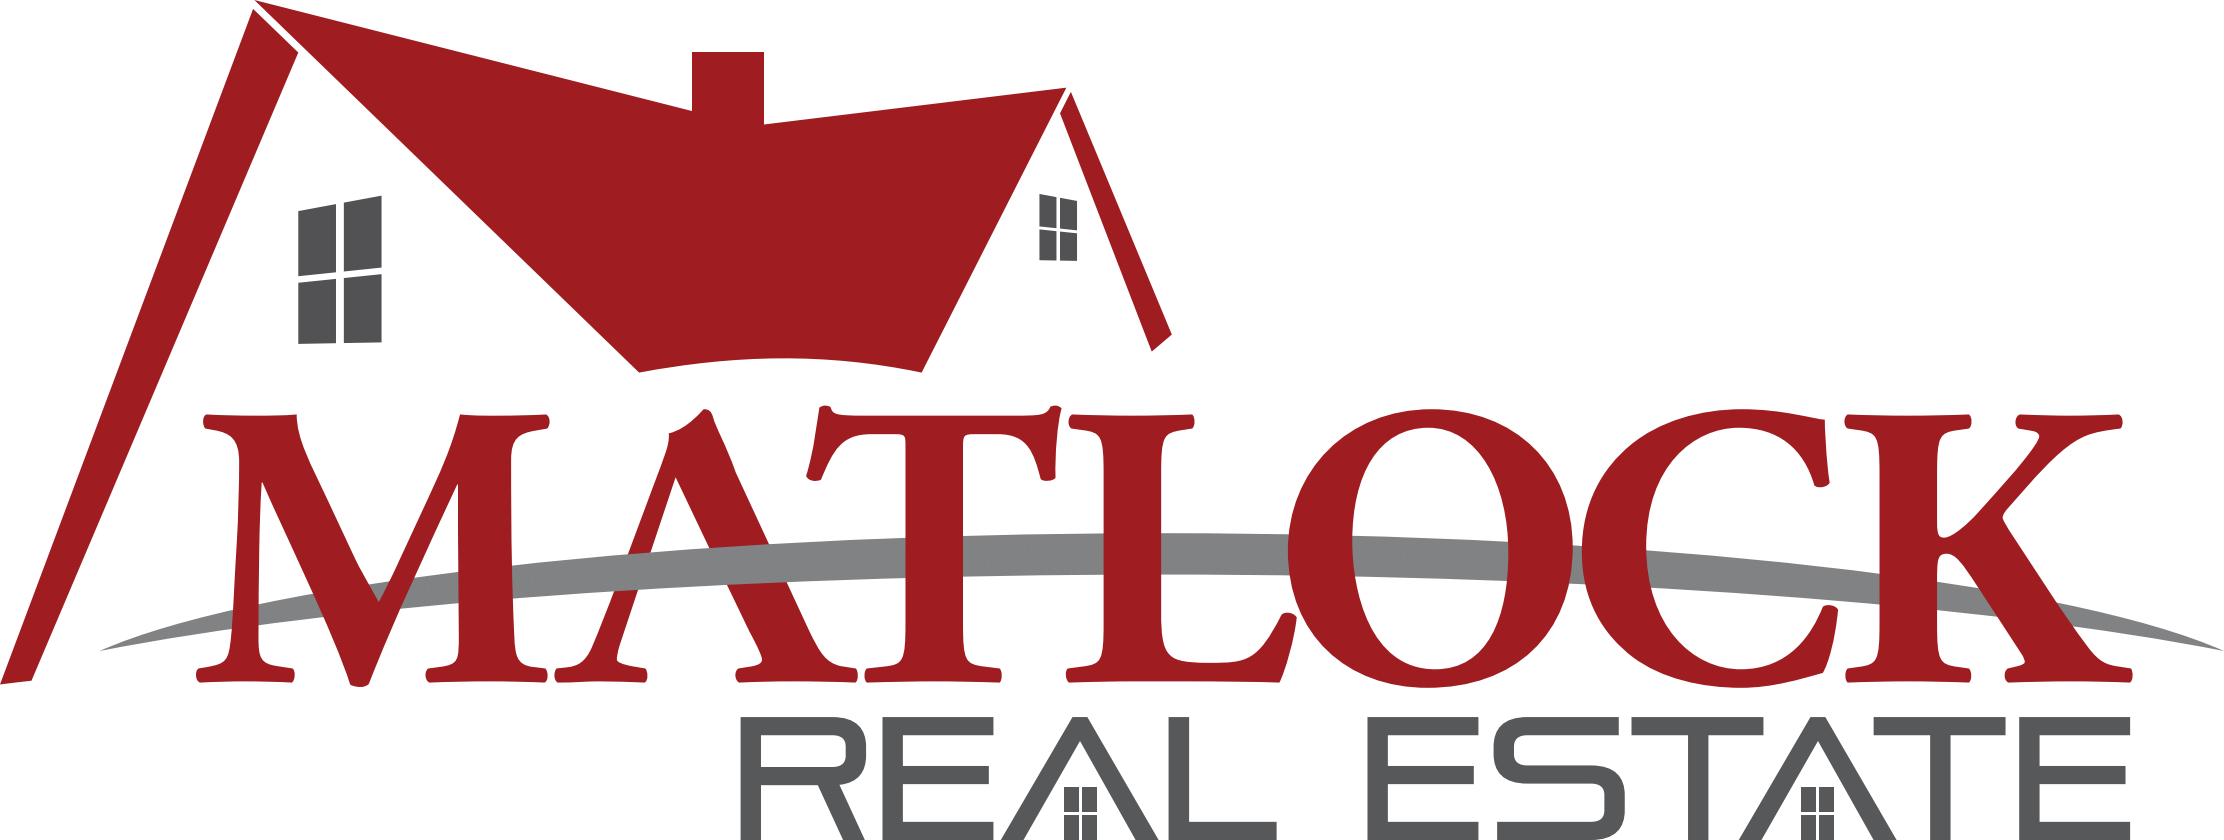 Matlock Real Estate logo